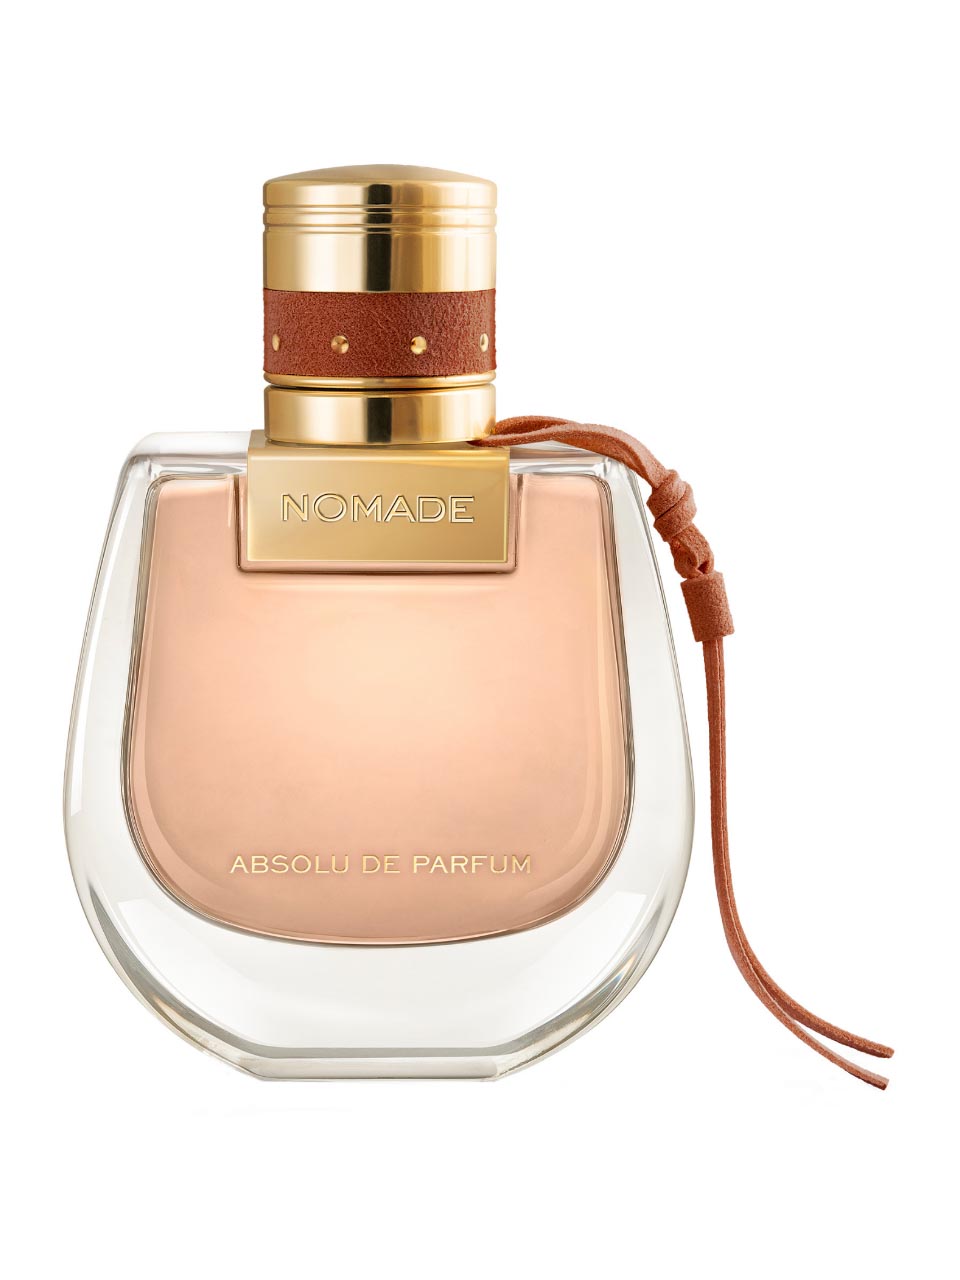 Chloé Nomade Absolu de Parfum 50 ml null - onesize - 1